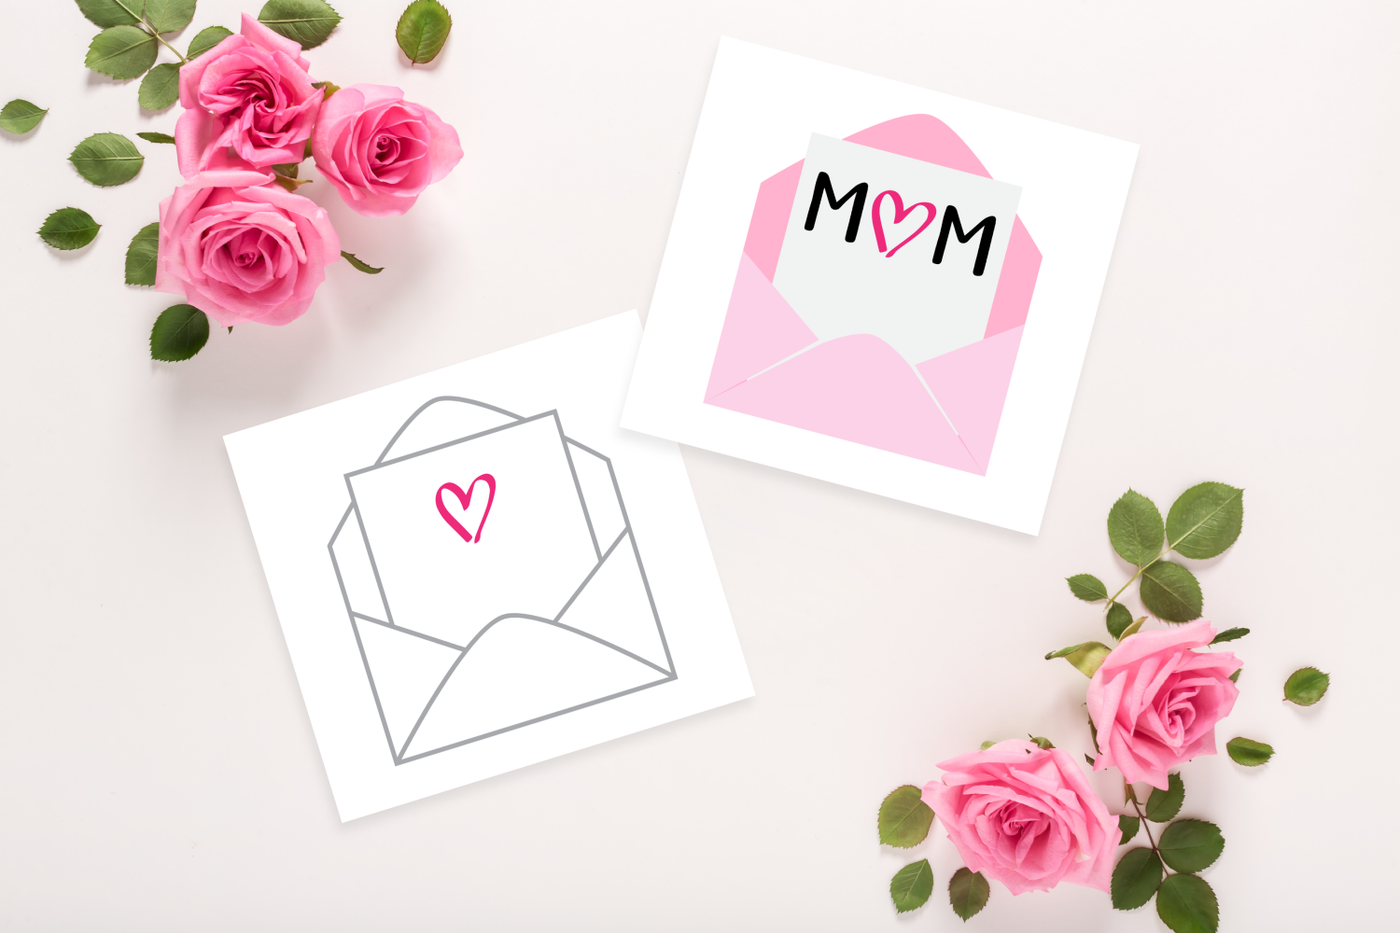 Mom envelope design